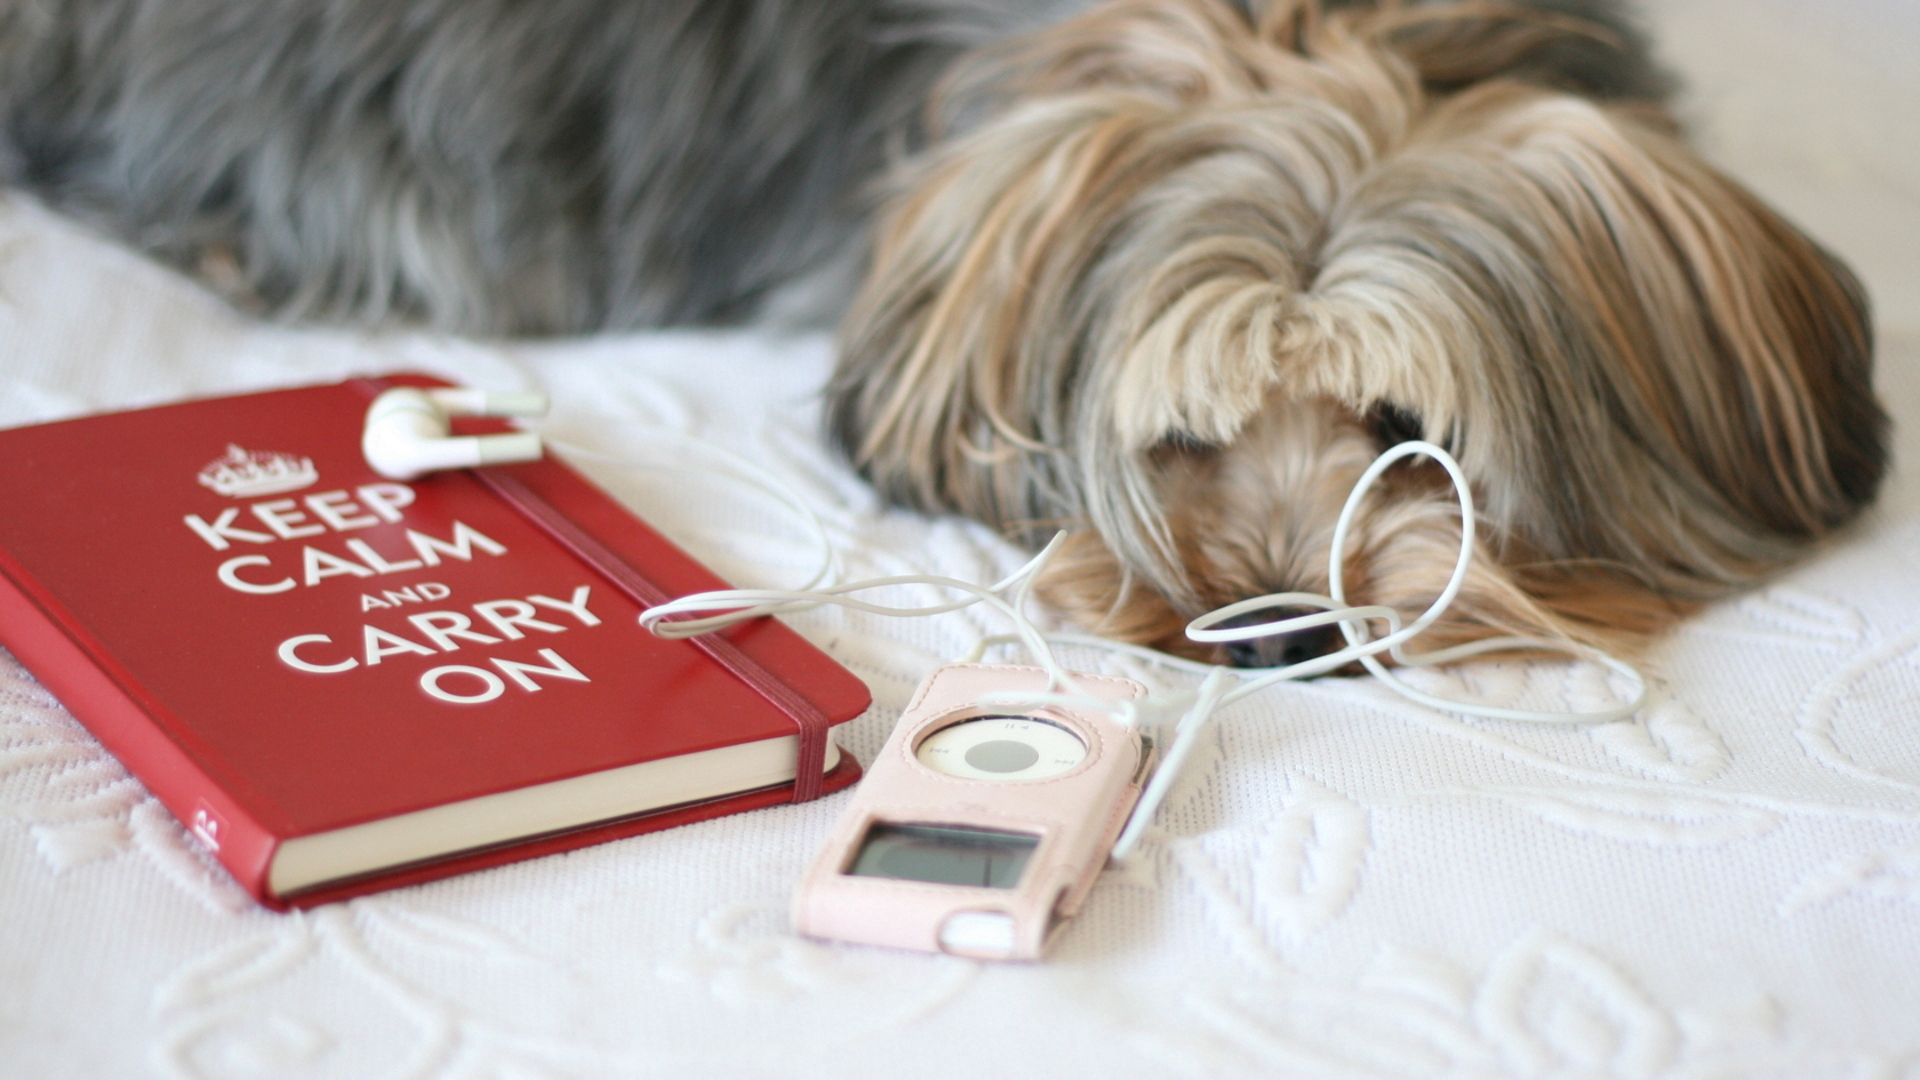 animals, dog, sleep, dream, book, player